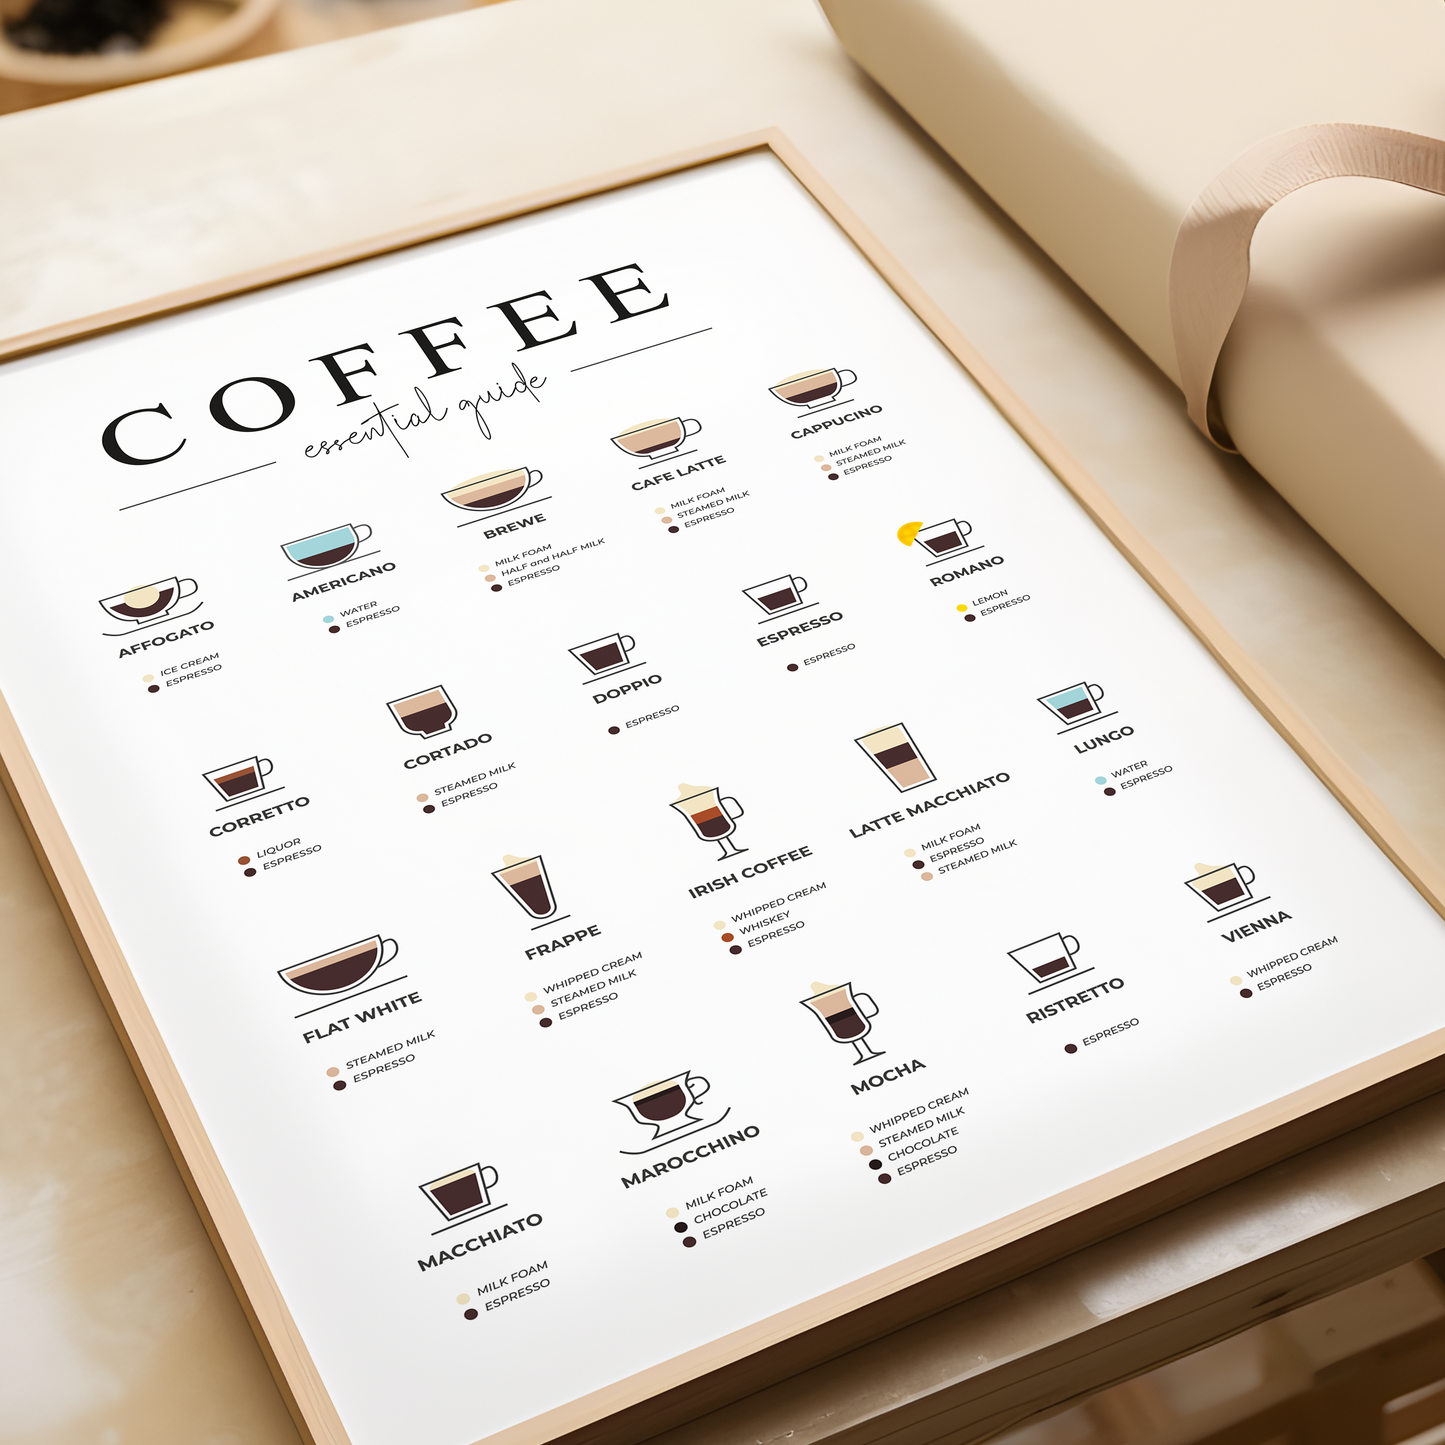 Coffee Essential Guide Print